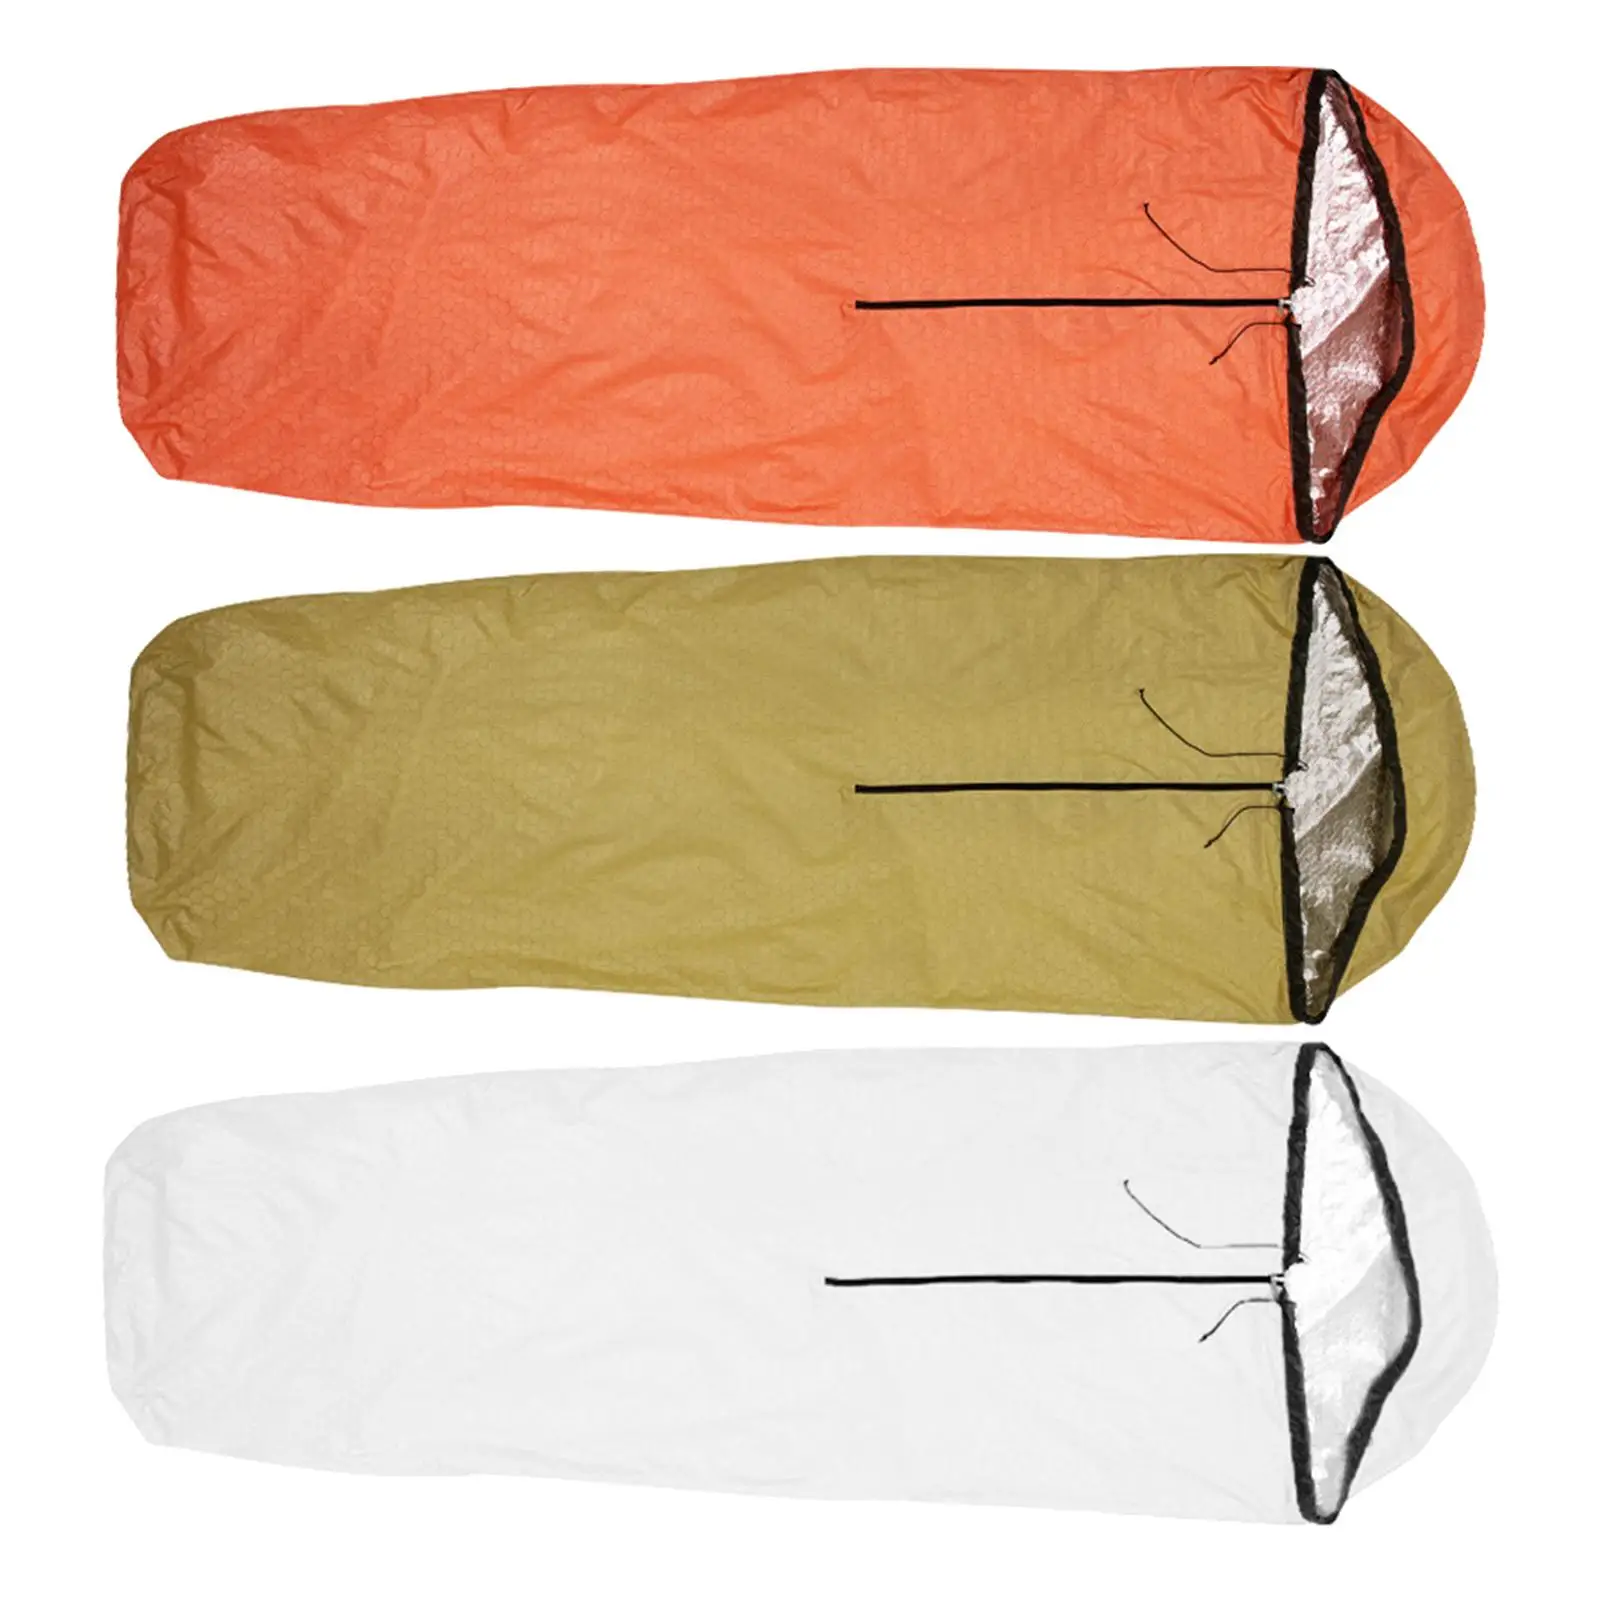 Emergency Sleeping Bag Waterproof for Outdoor Survival Activities Hunting